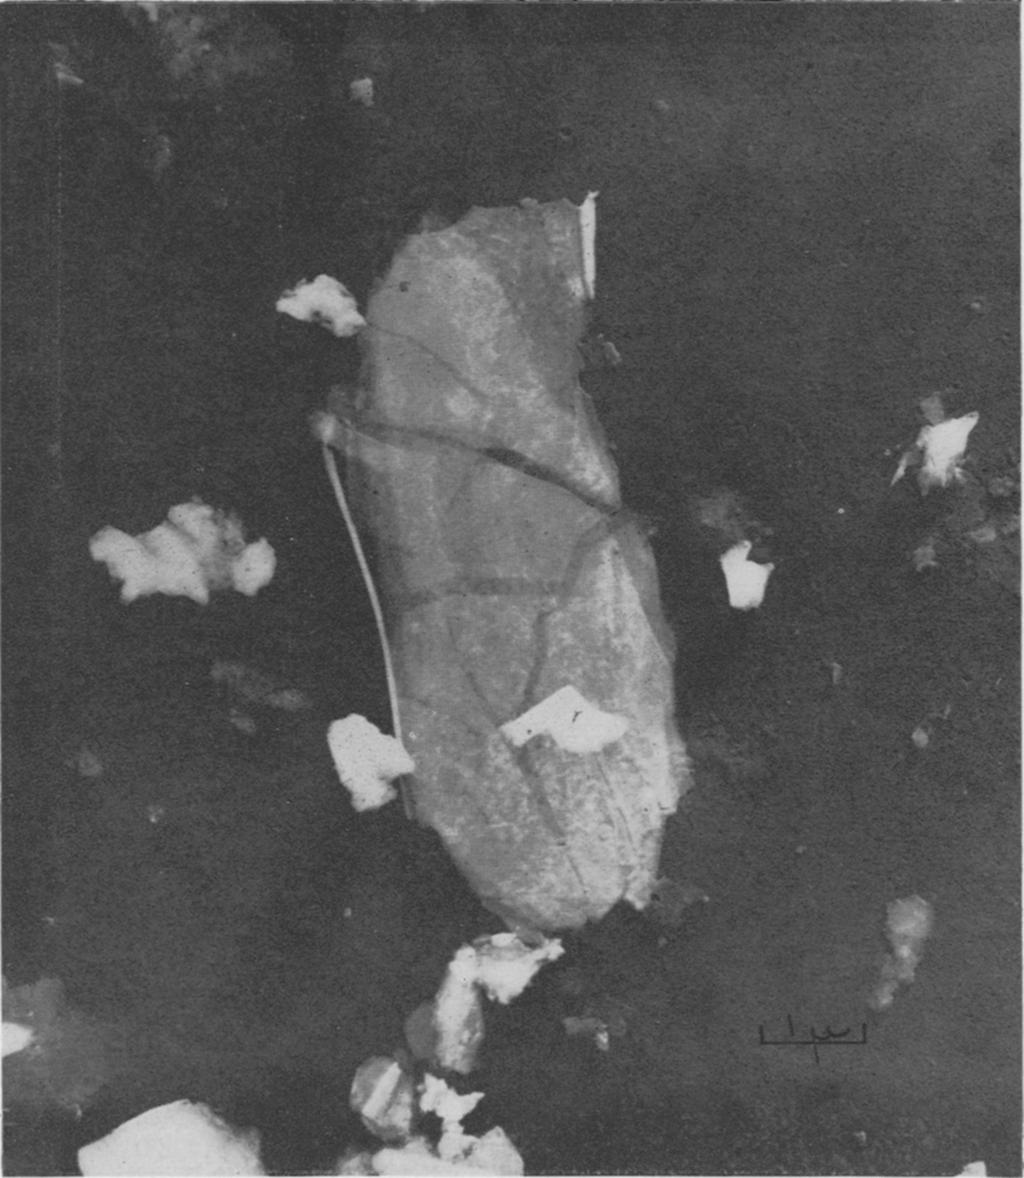 PLATE 3. Kaolinite crystal showing shrinkage cracks.